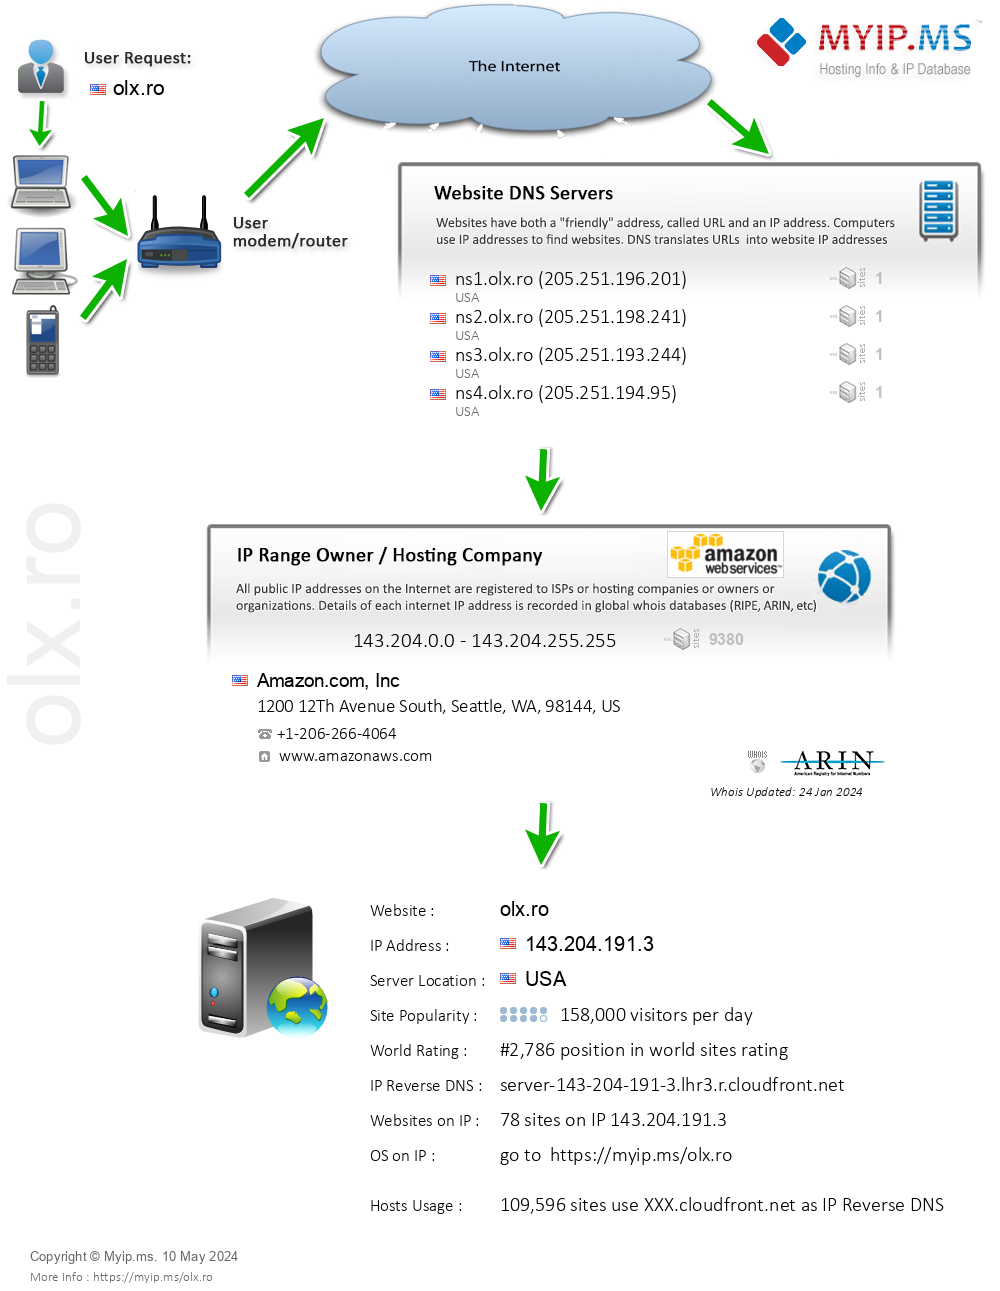 Olx.ro - Website Hosting Visual IP Diagram